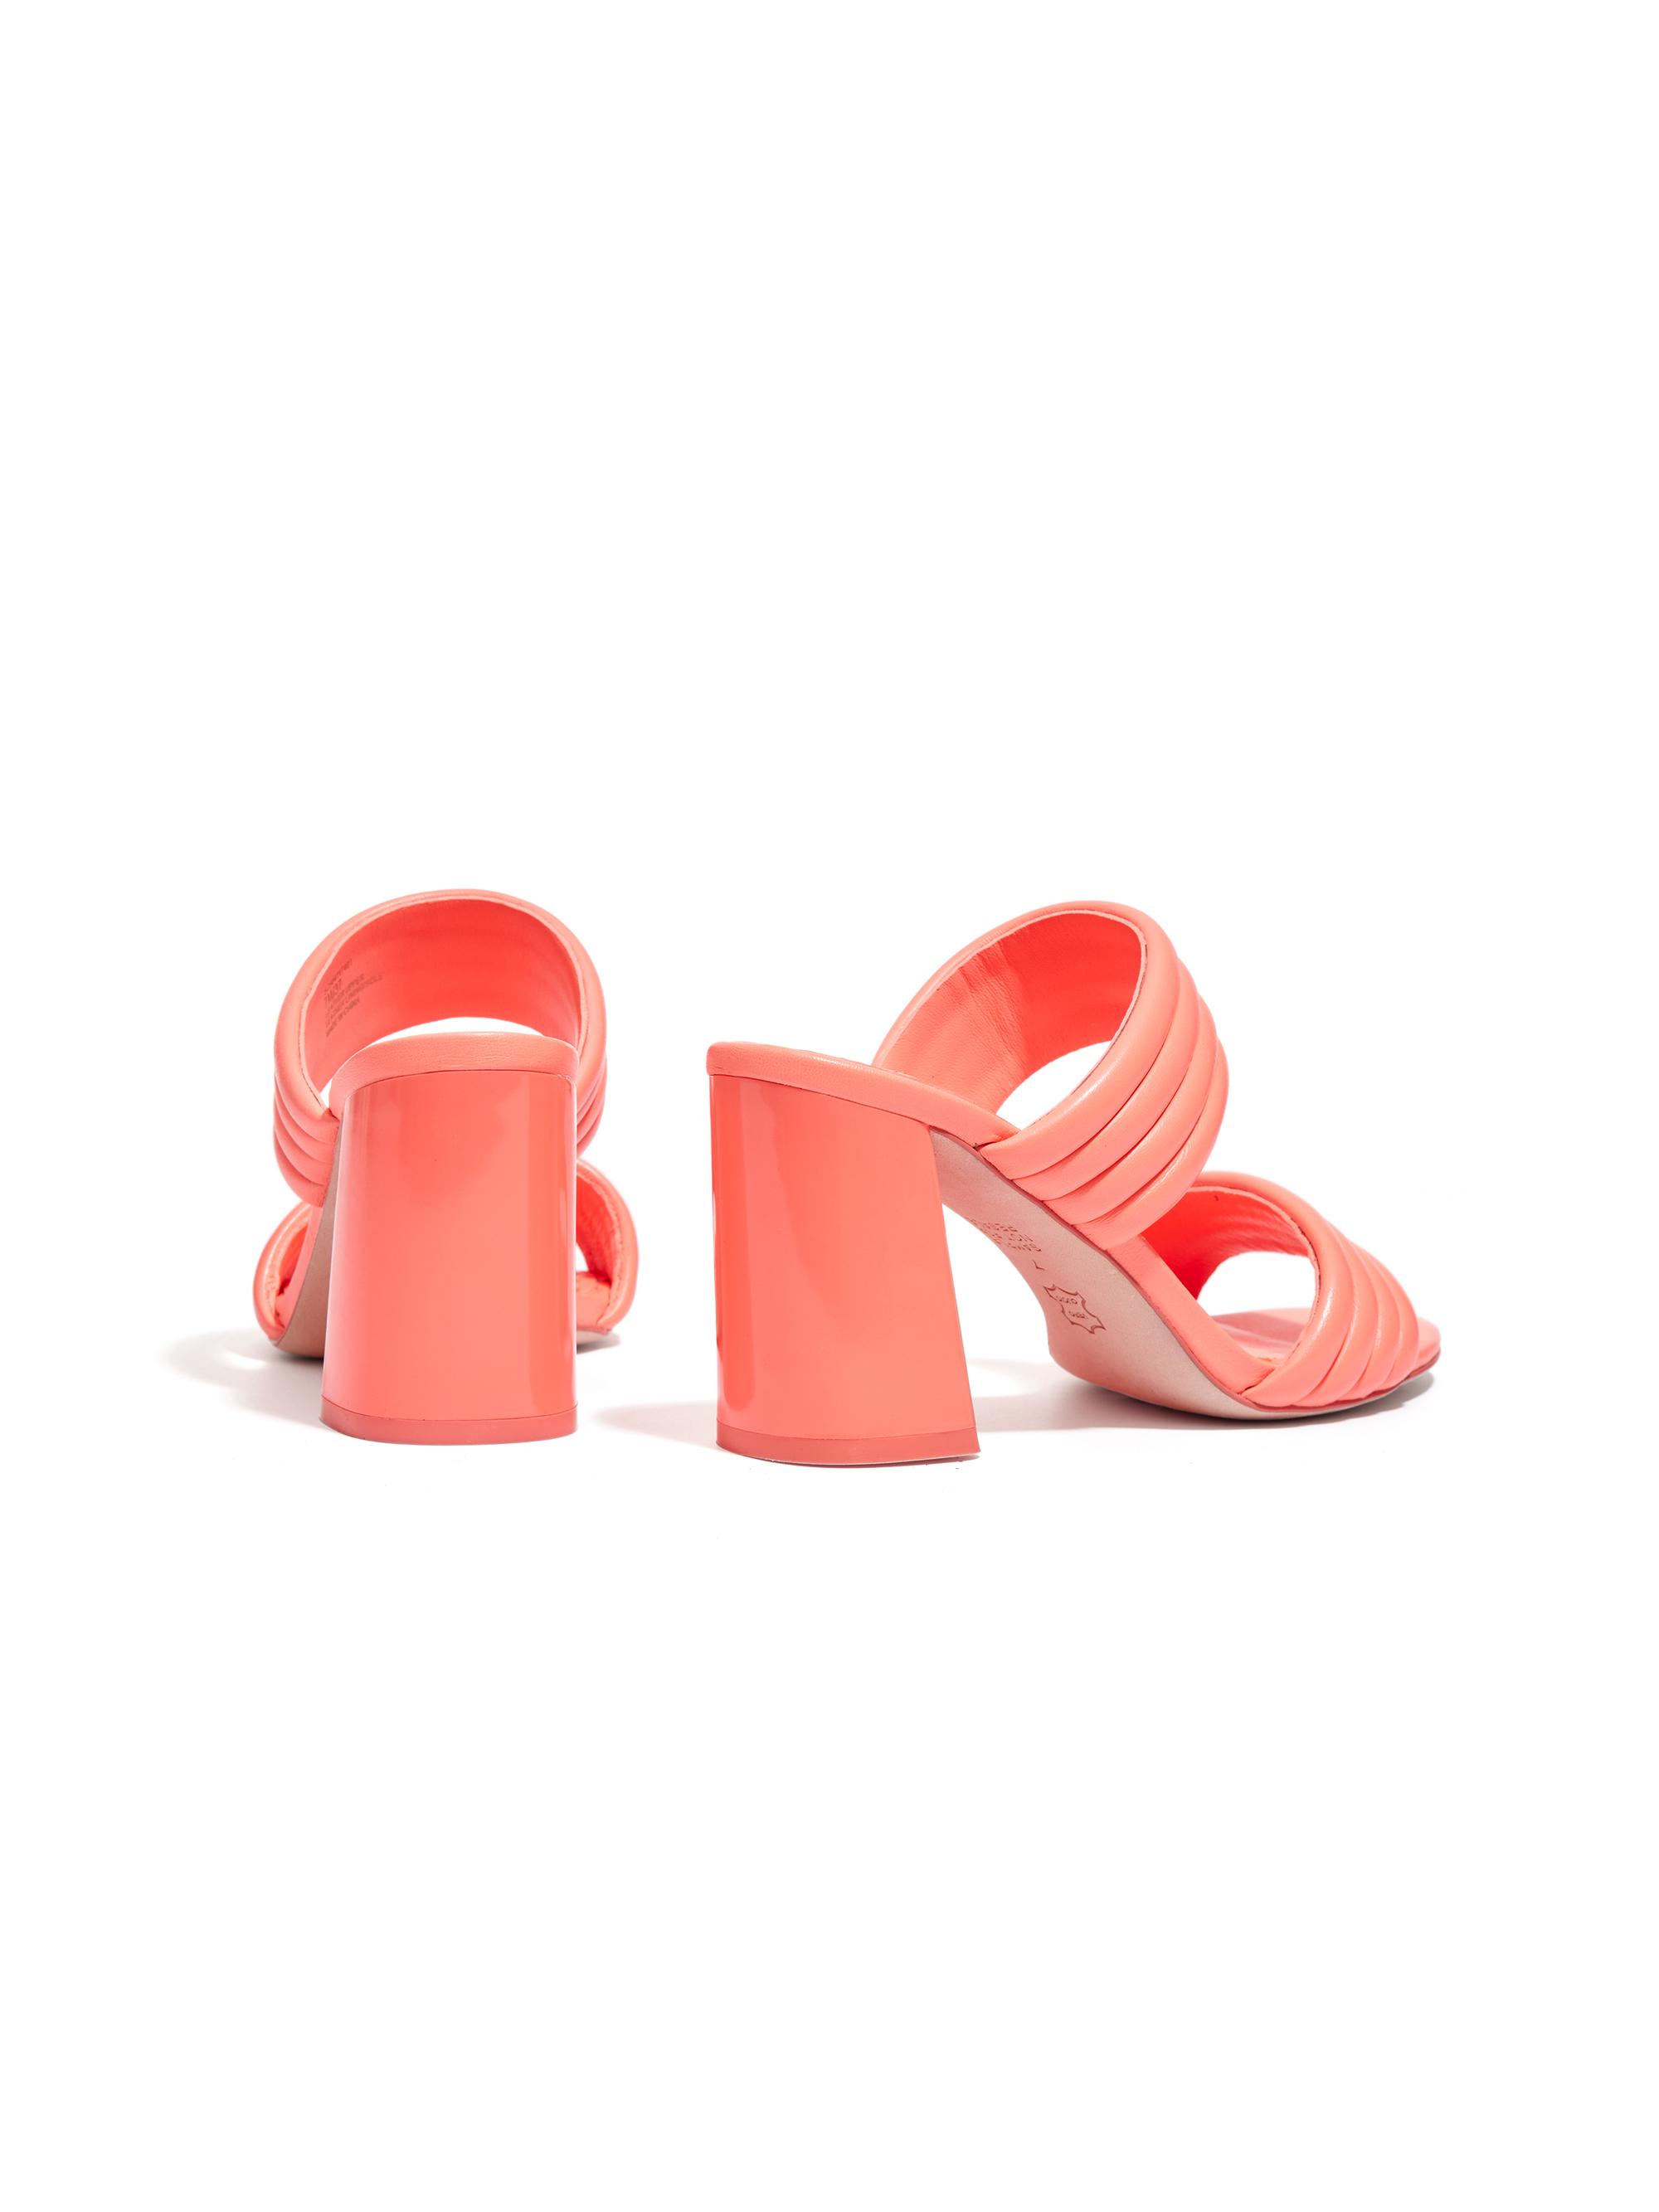 Alice + Olivia Leather Lori Neon Block Heel in Neon Peach (Pink) - Lyst